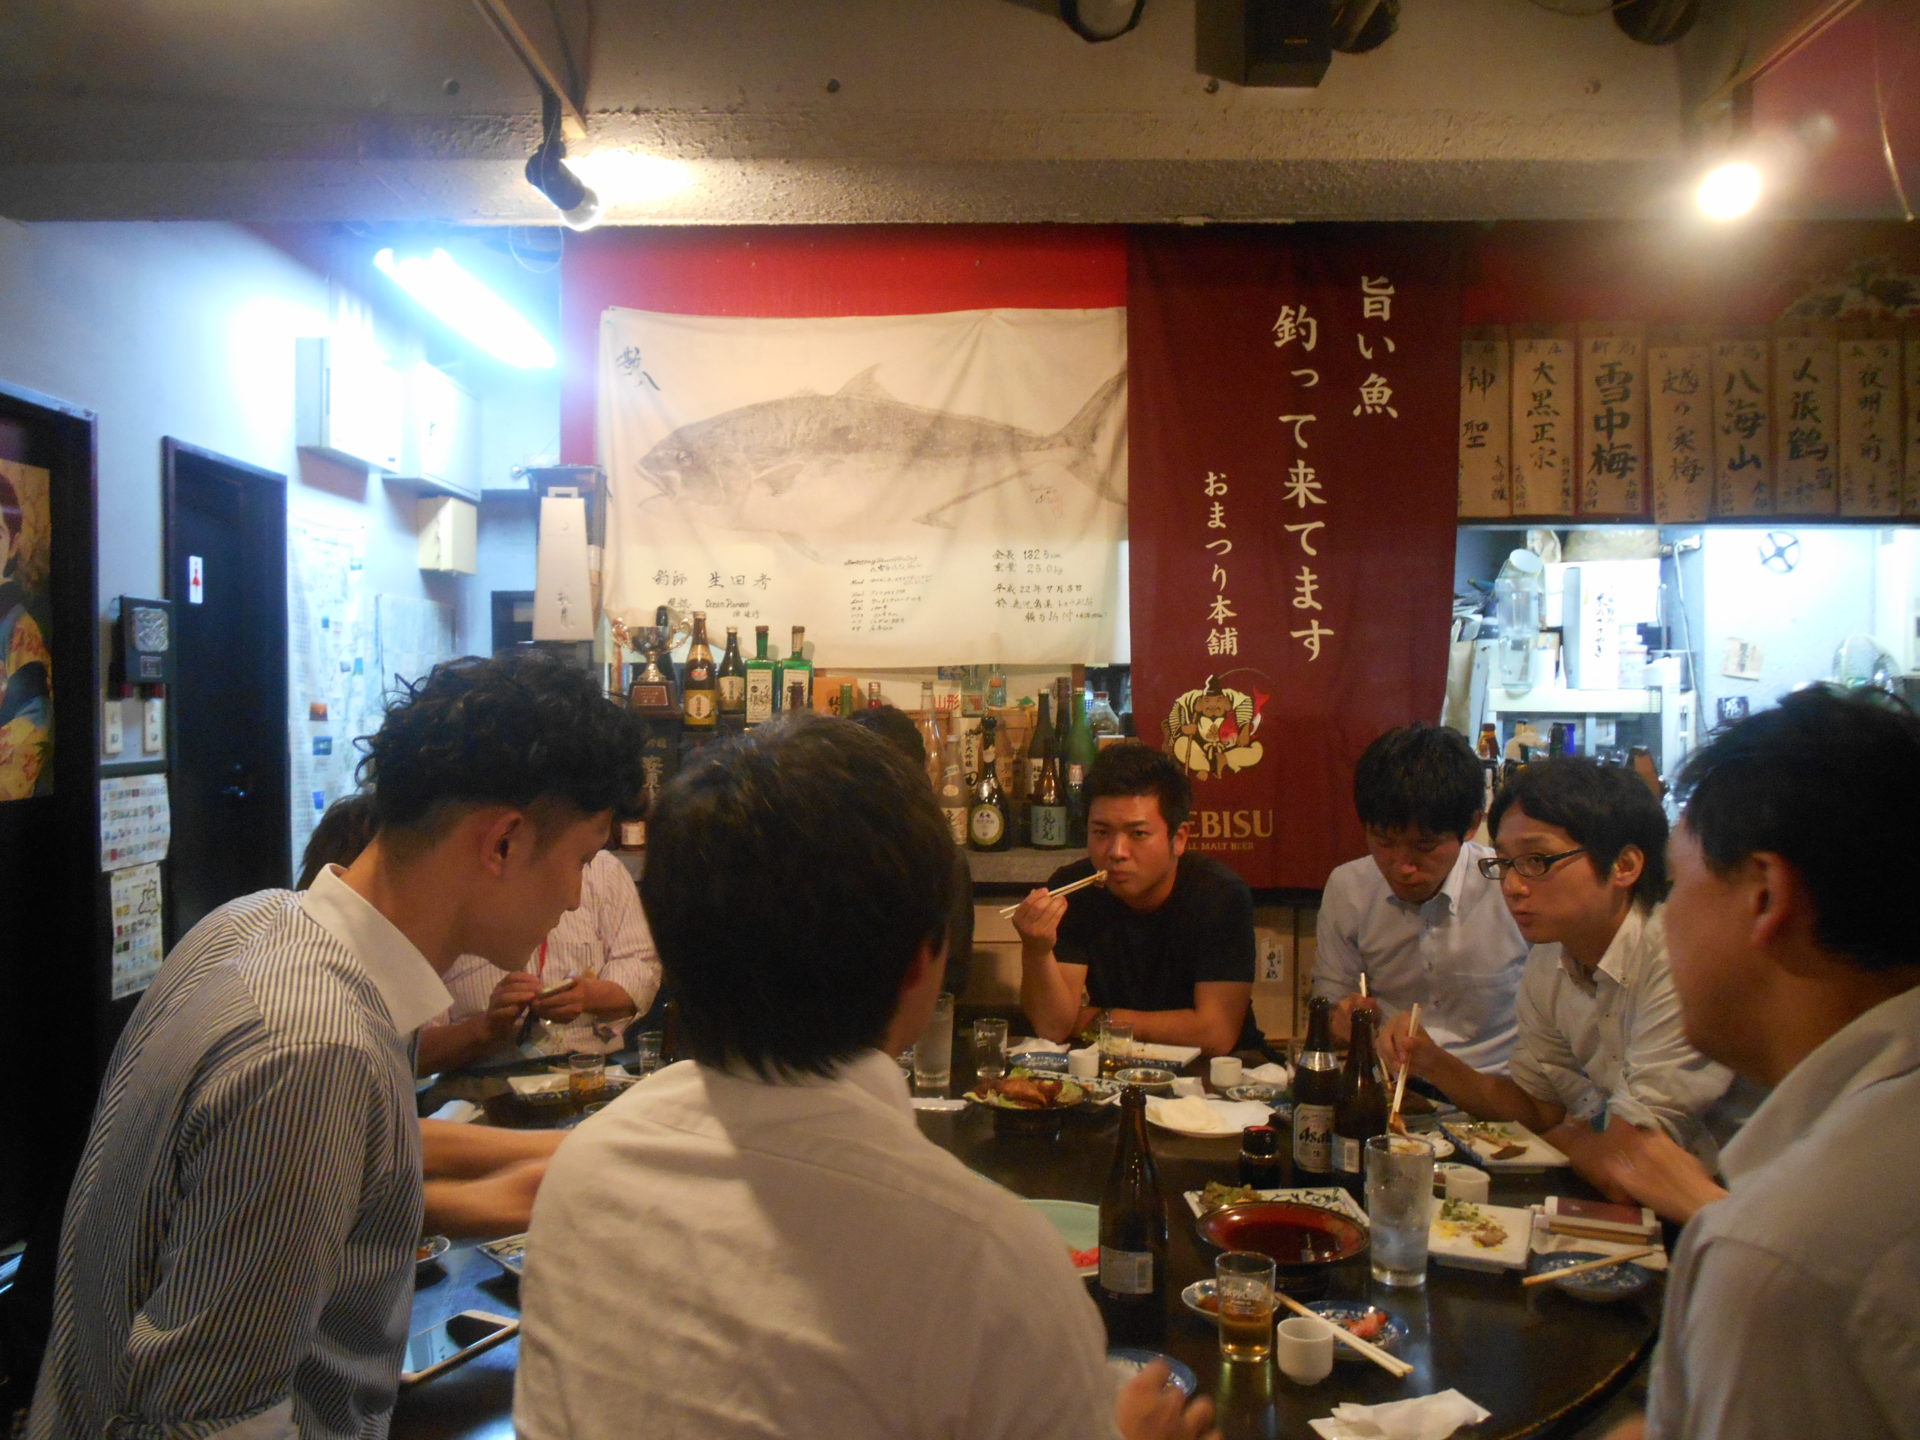 DSCN5610 1920x1440 - 2015年9月14日 AOsuki定例飲み会開催しました。